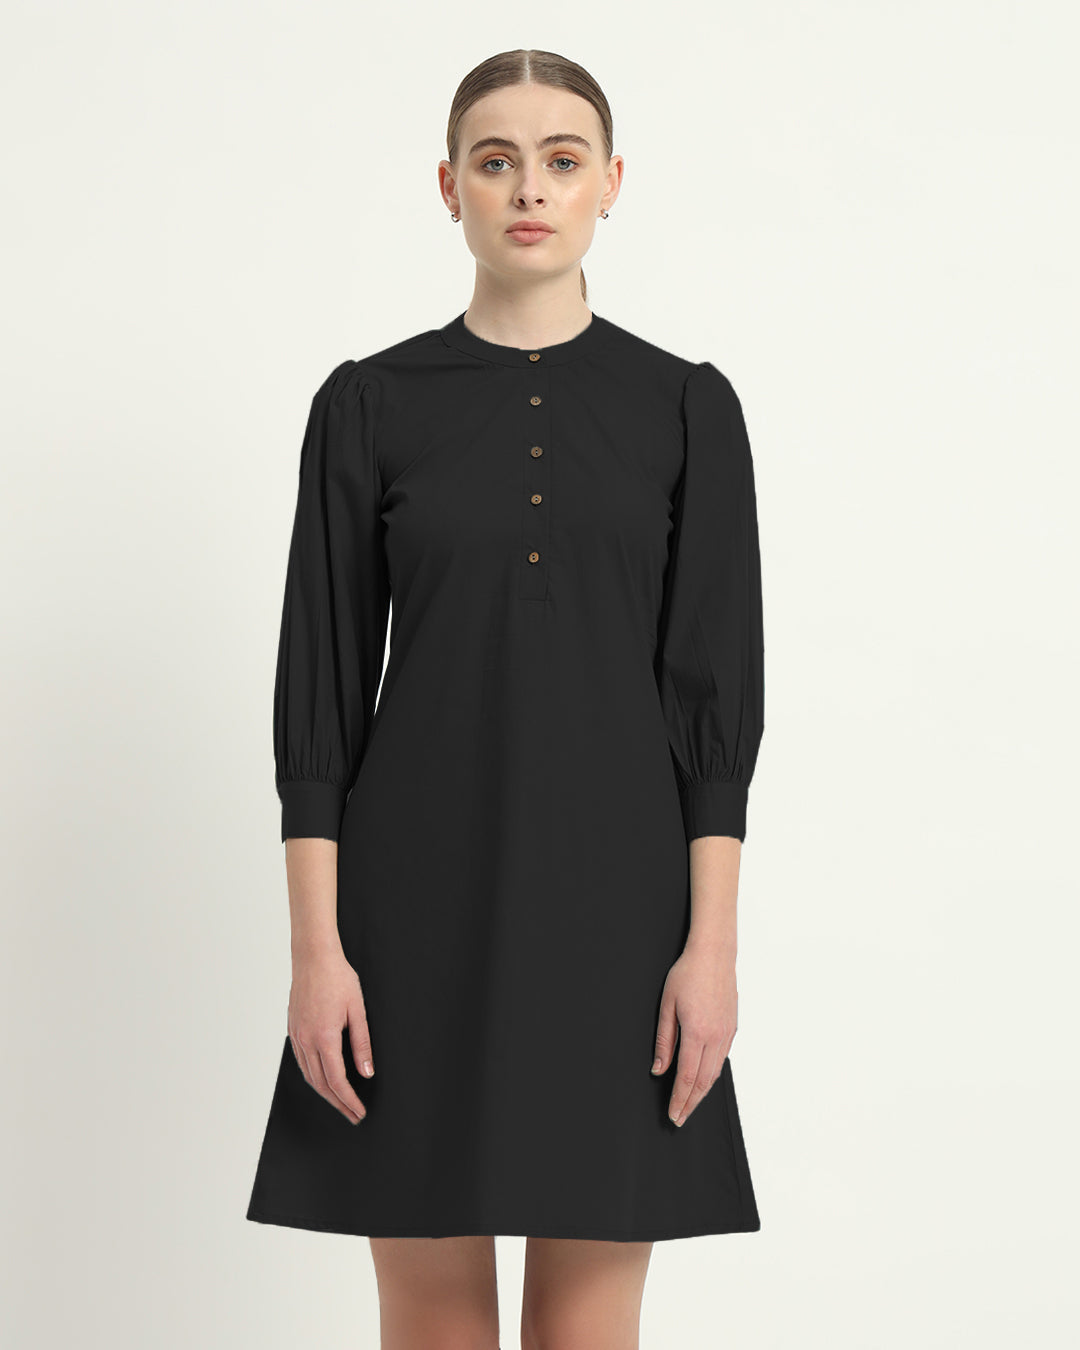 The Roslyn Noir Cotton Dress